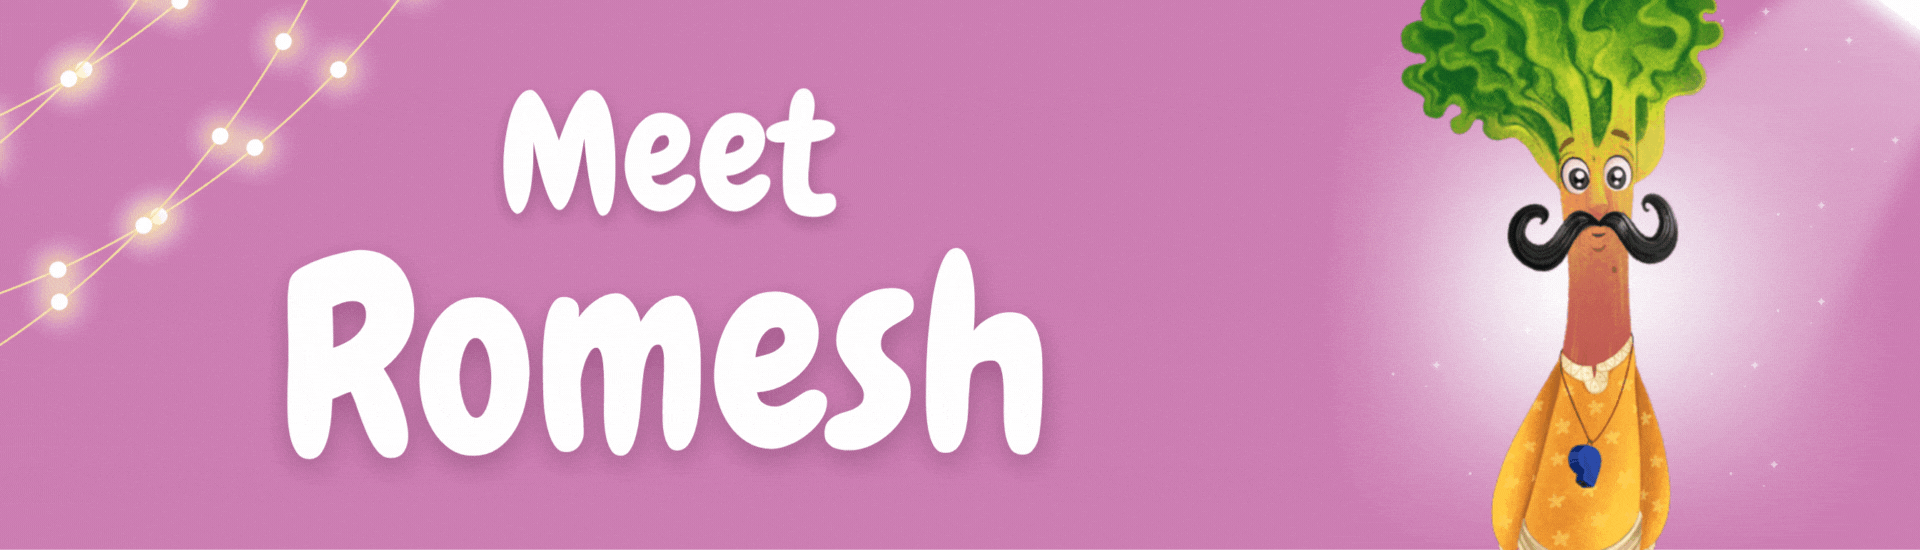 Meet Romesh Rhubarb